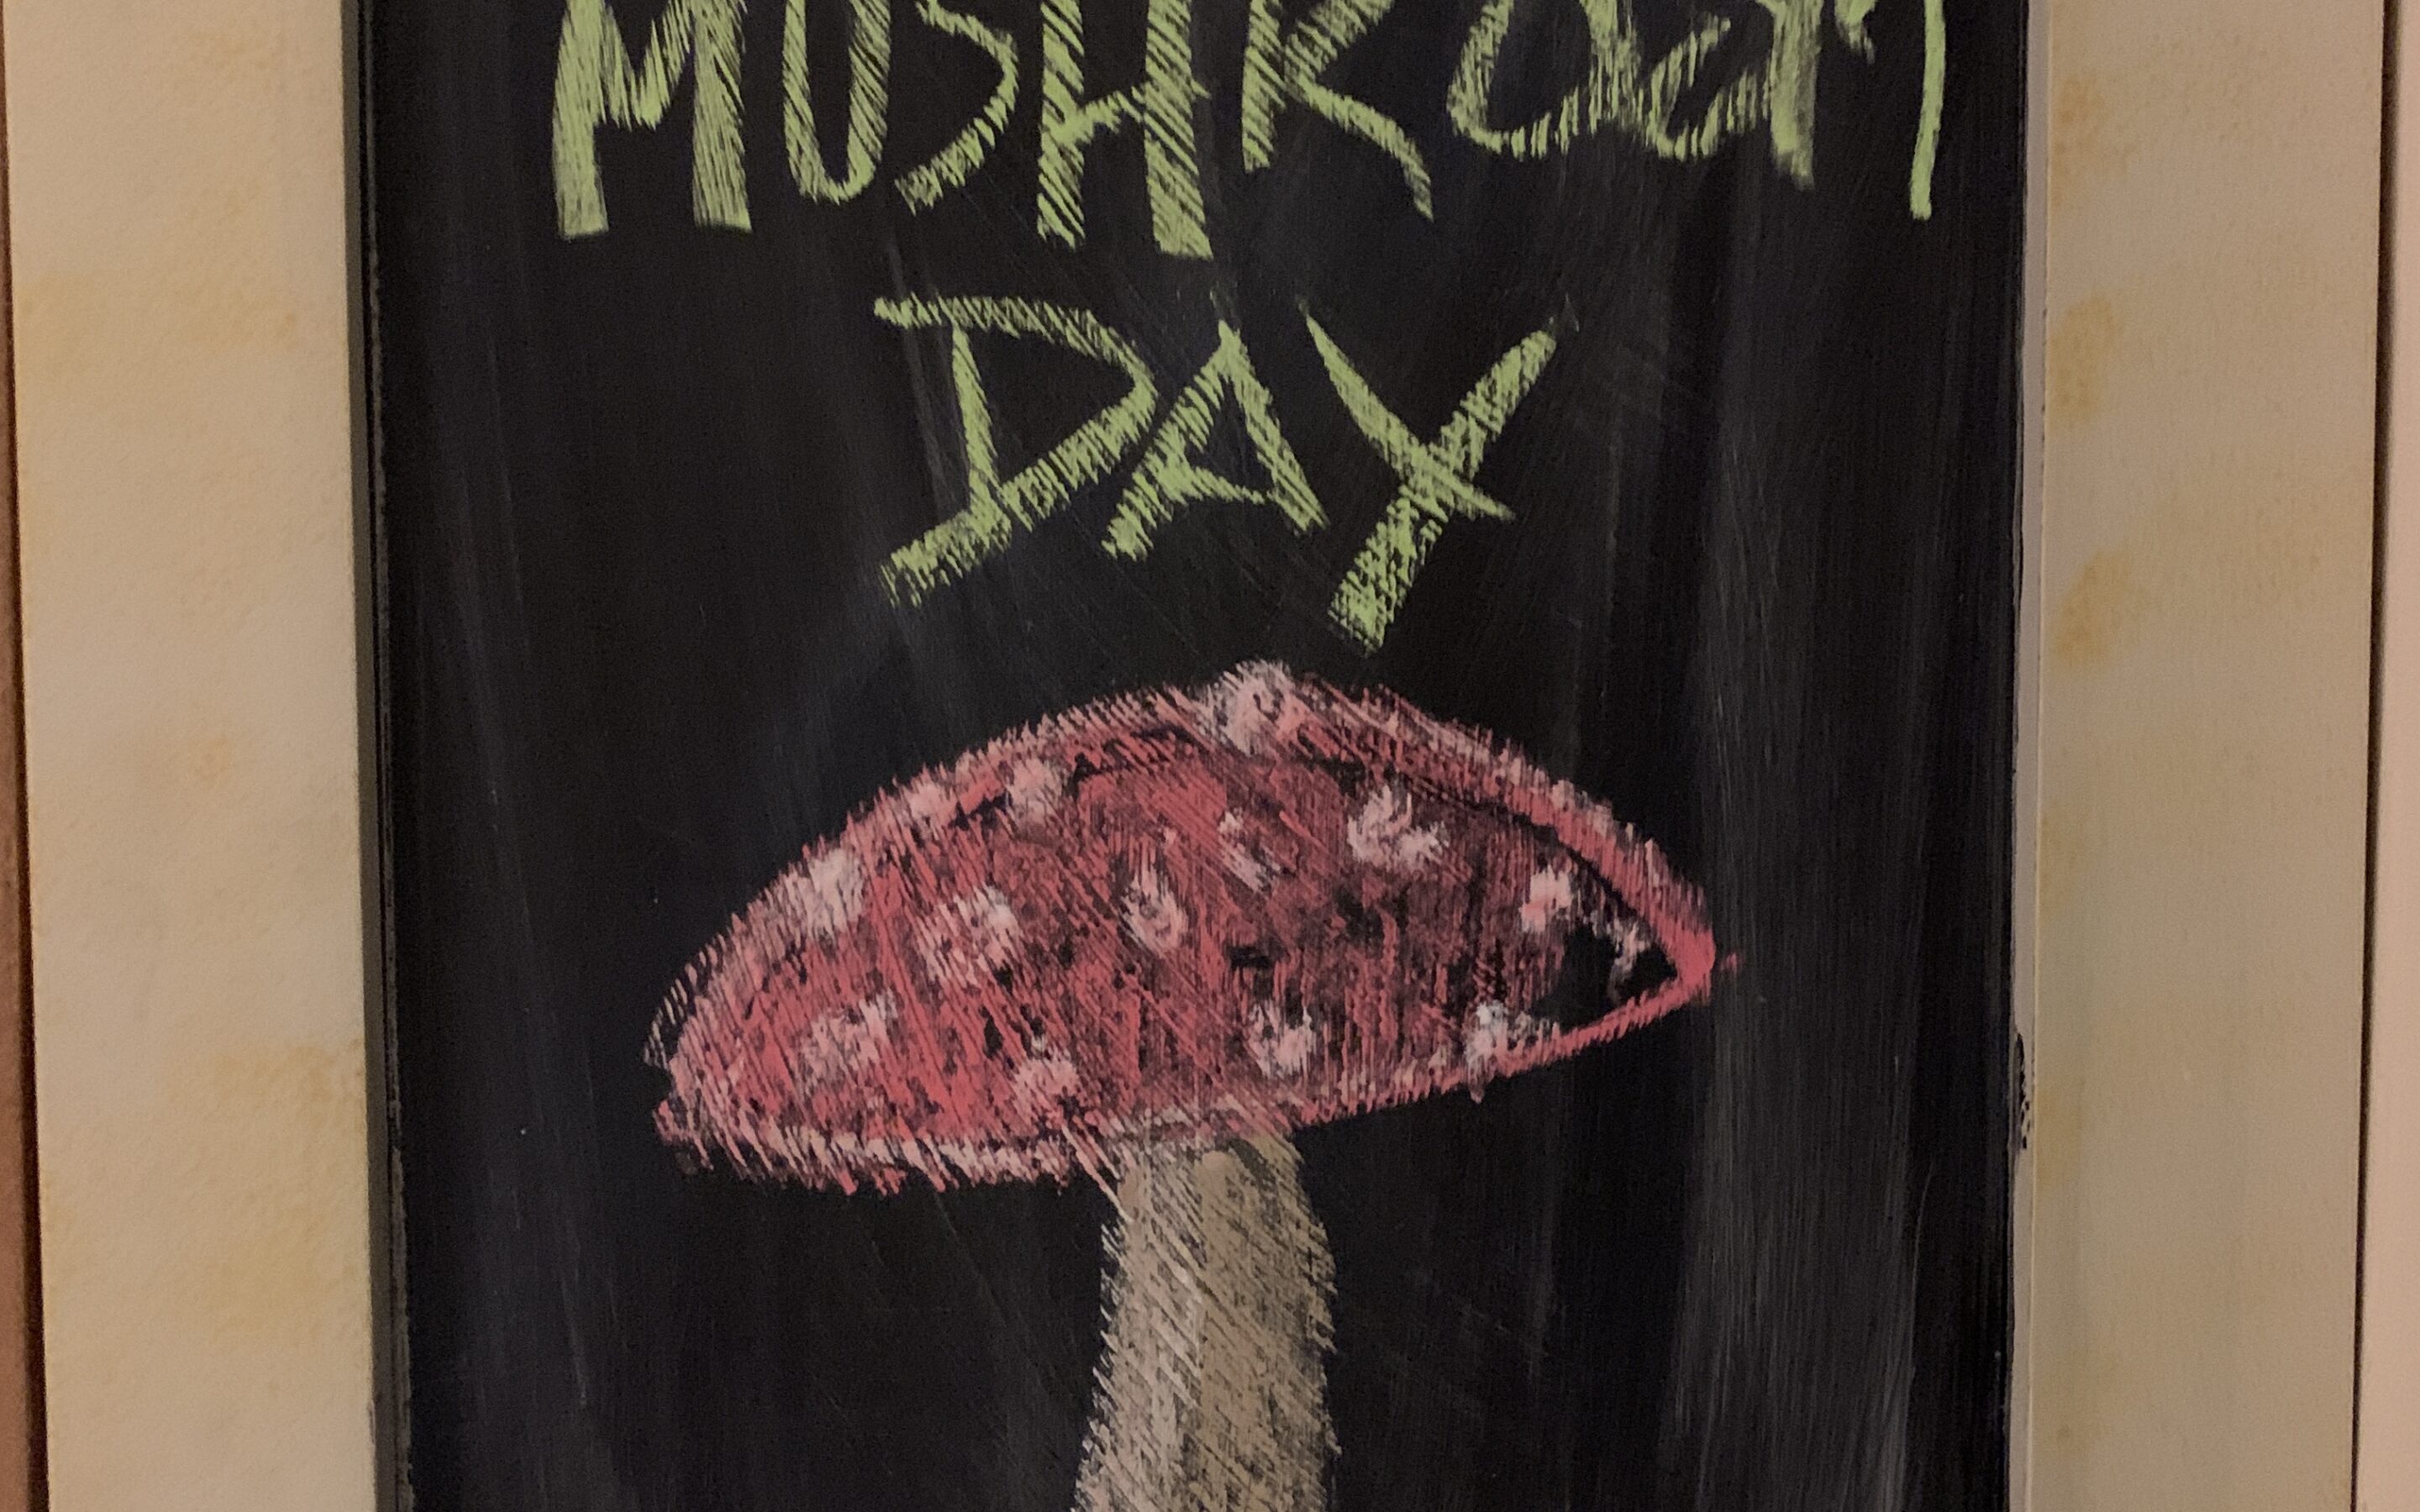 National mushroom day